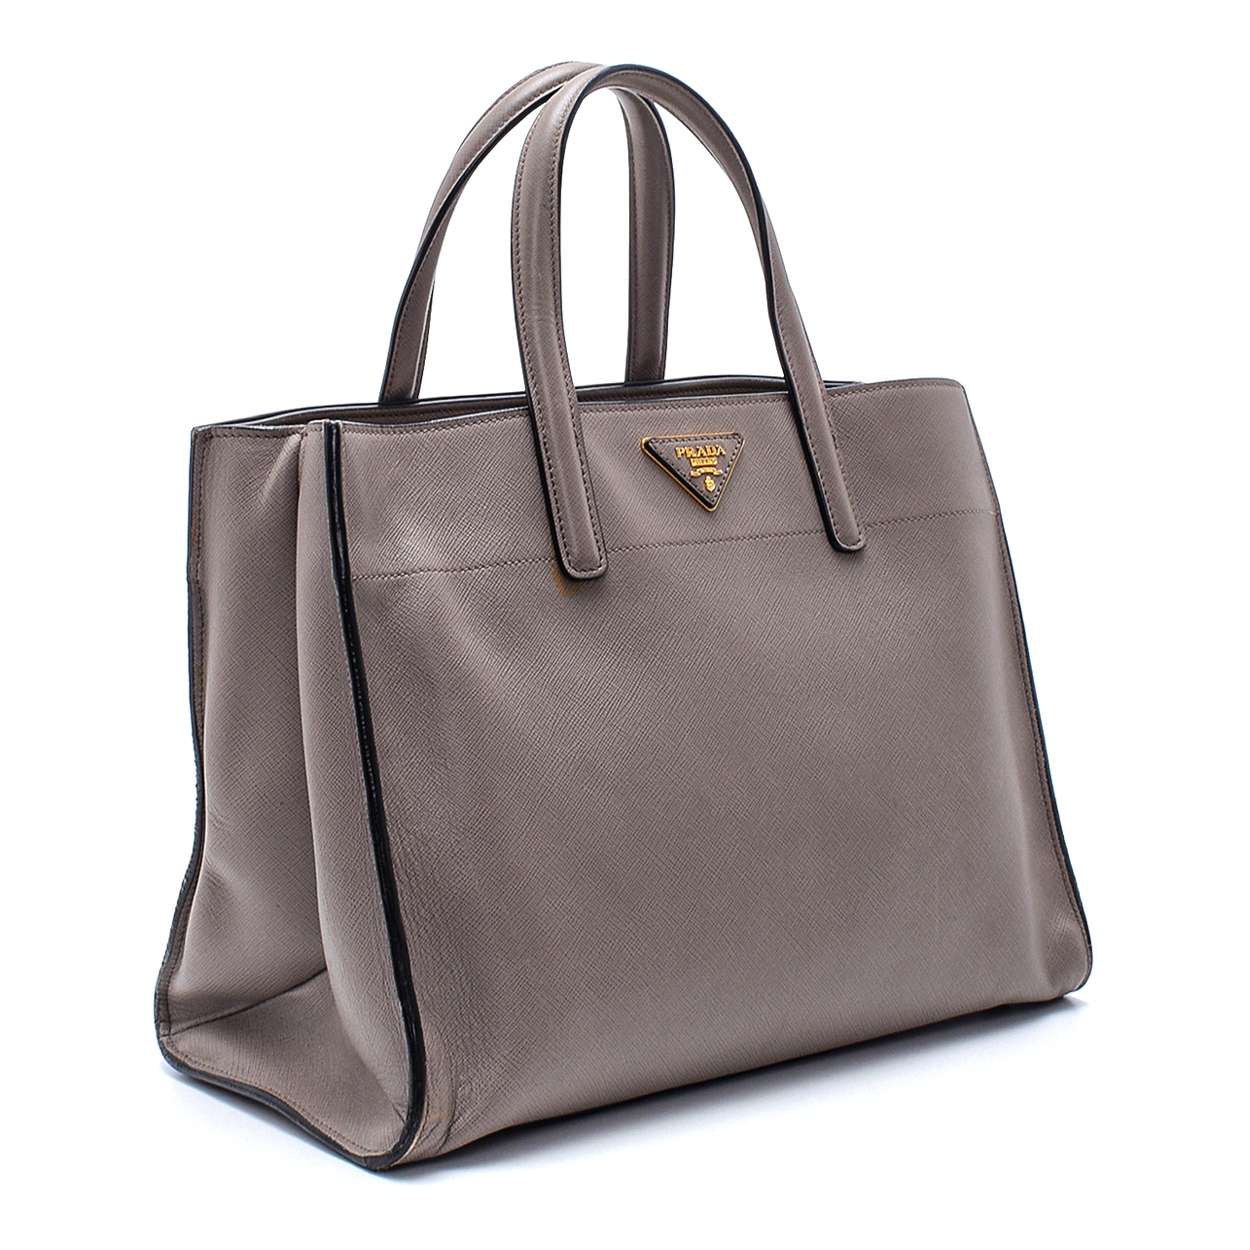 Prada - Grey Saffiano Leather Tote Bag